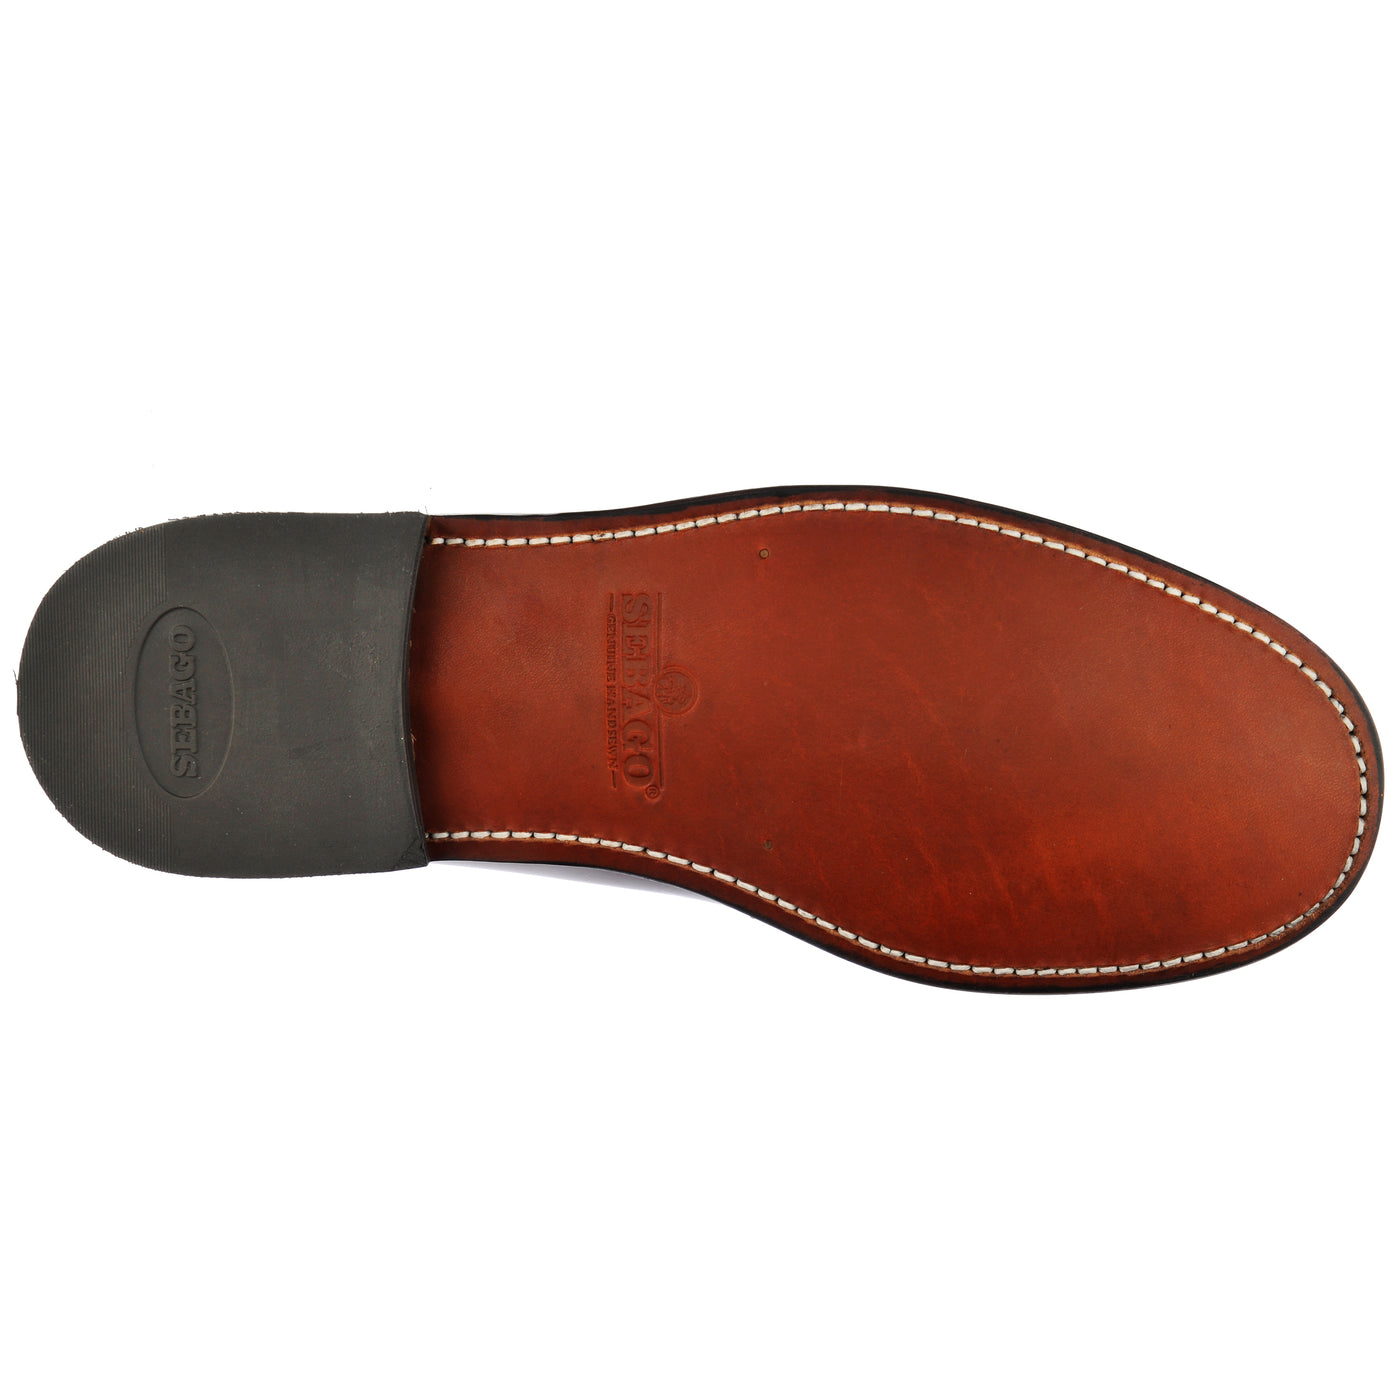 Men's Loafers | Sebago | Citysides | Classic Dan | Garnet | Natural Leather Sole